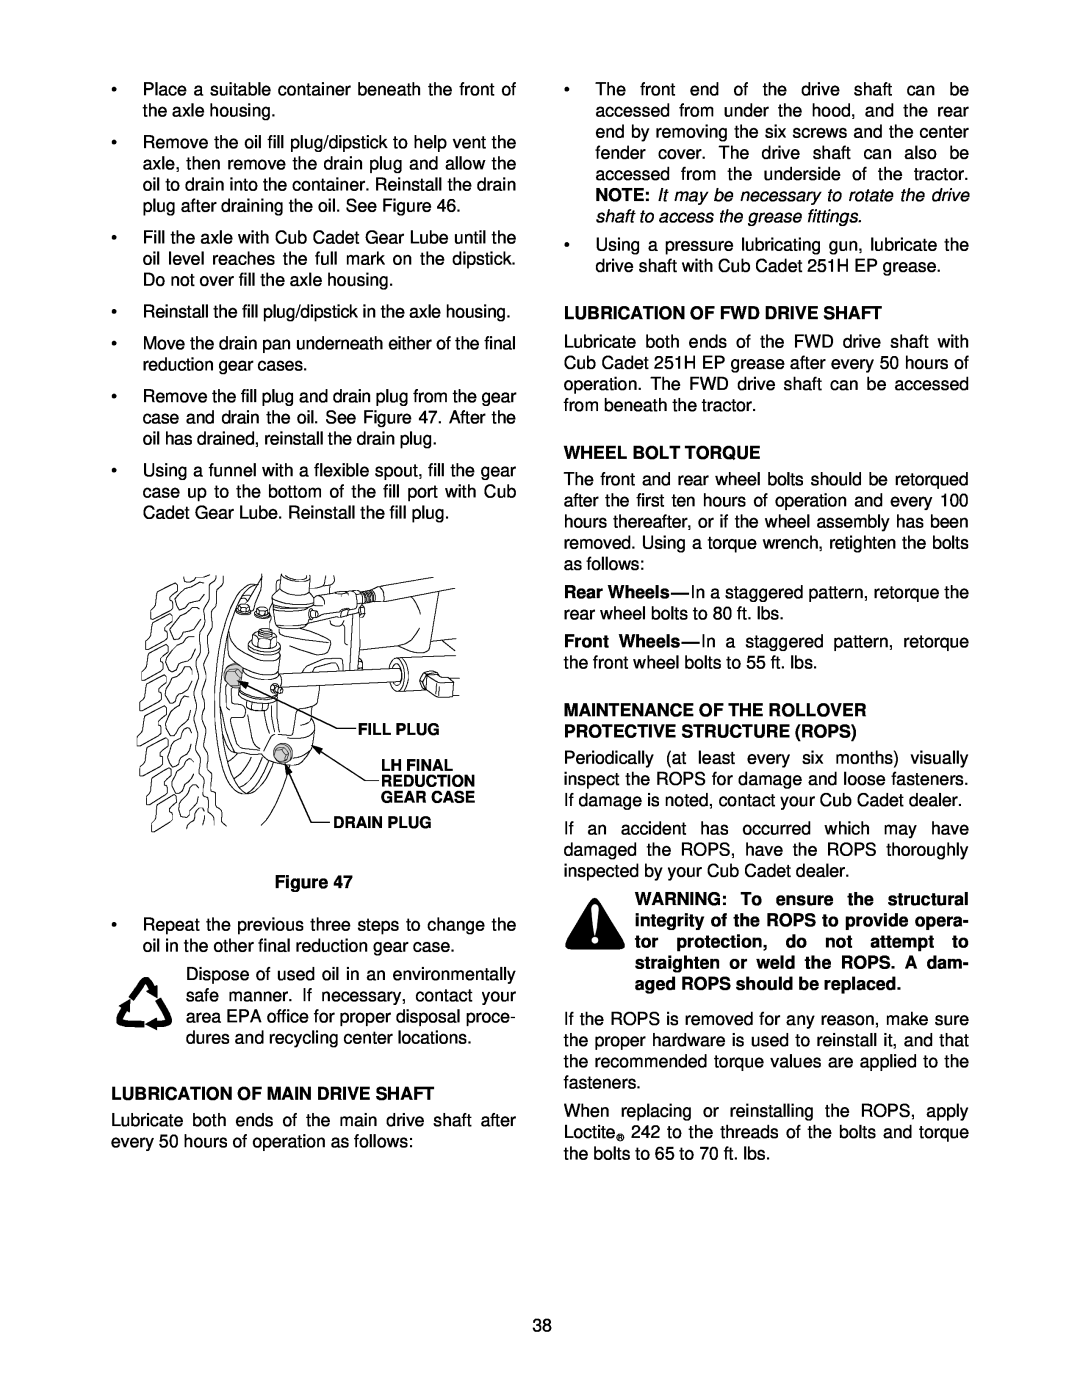 Cub Cadet 7264 manual Lubrication Of Main Drive Shaft, Lubrication Of Fwd Drive Shaft, Wheel Bolt Torque 